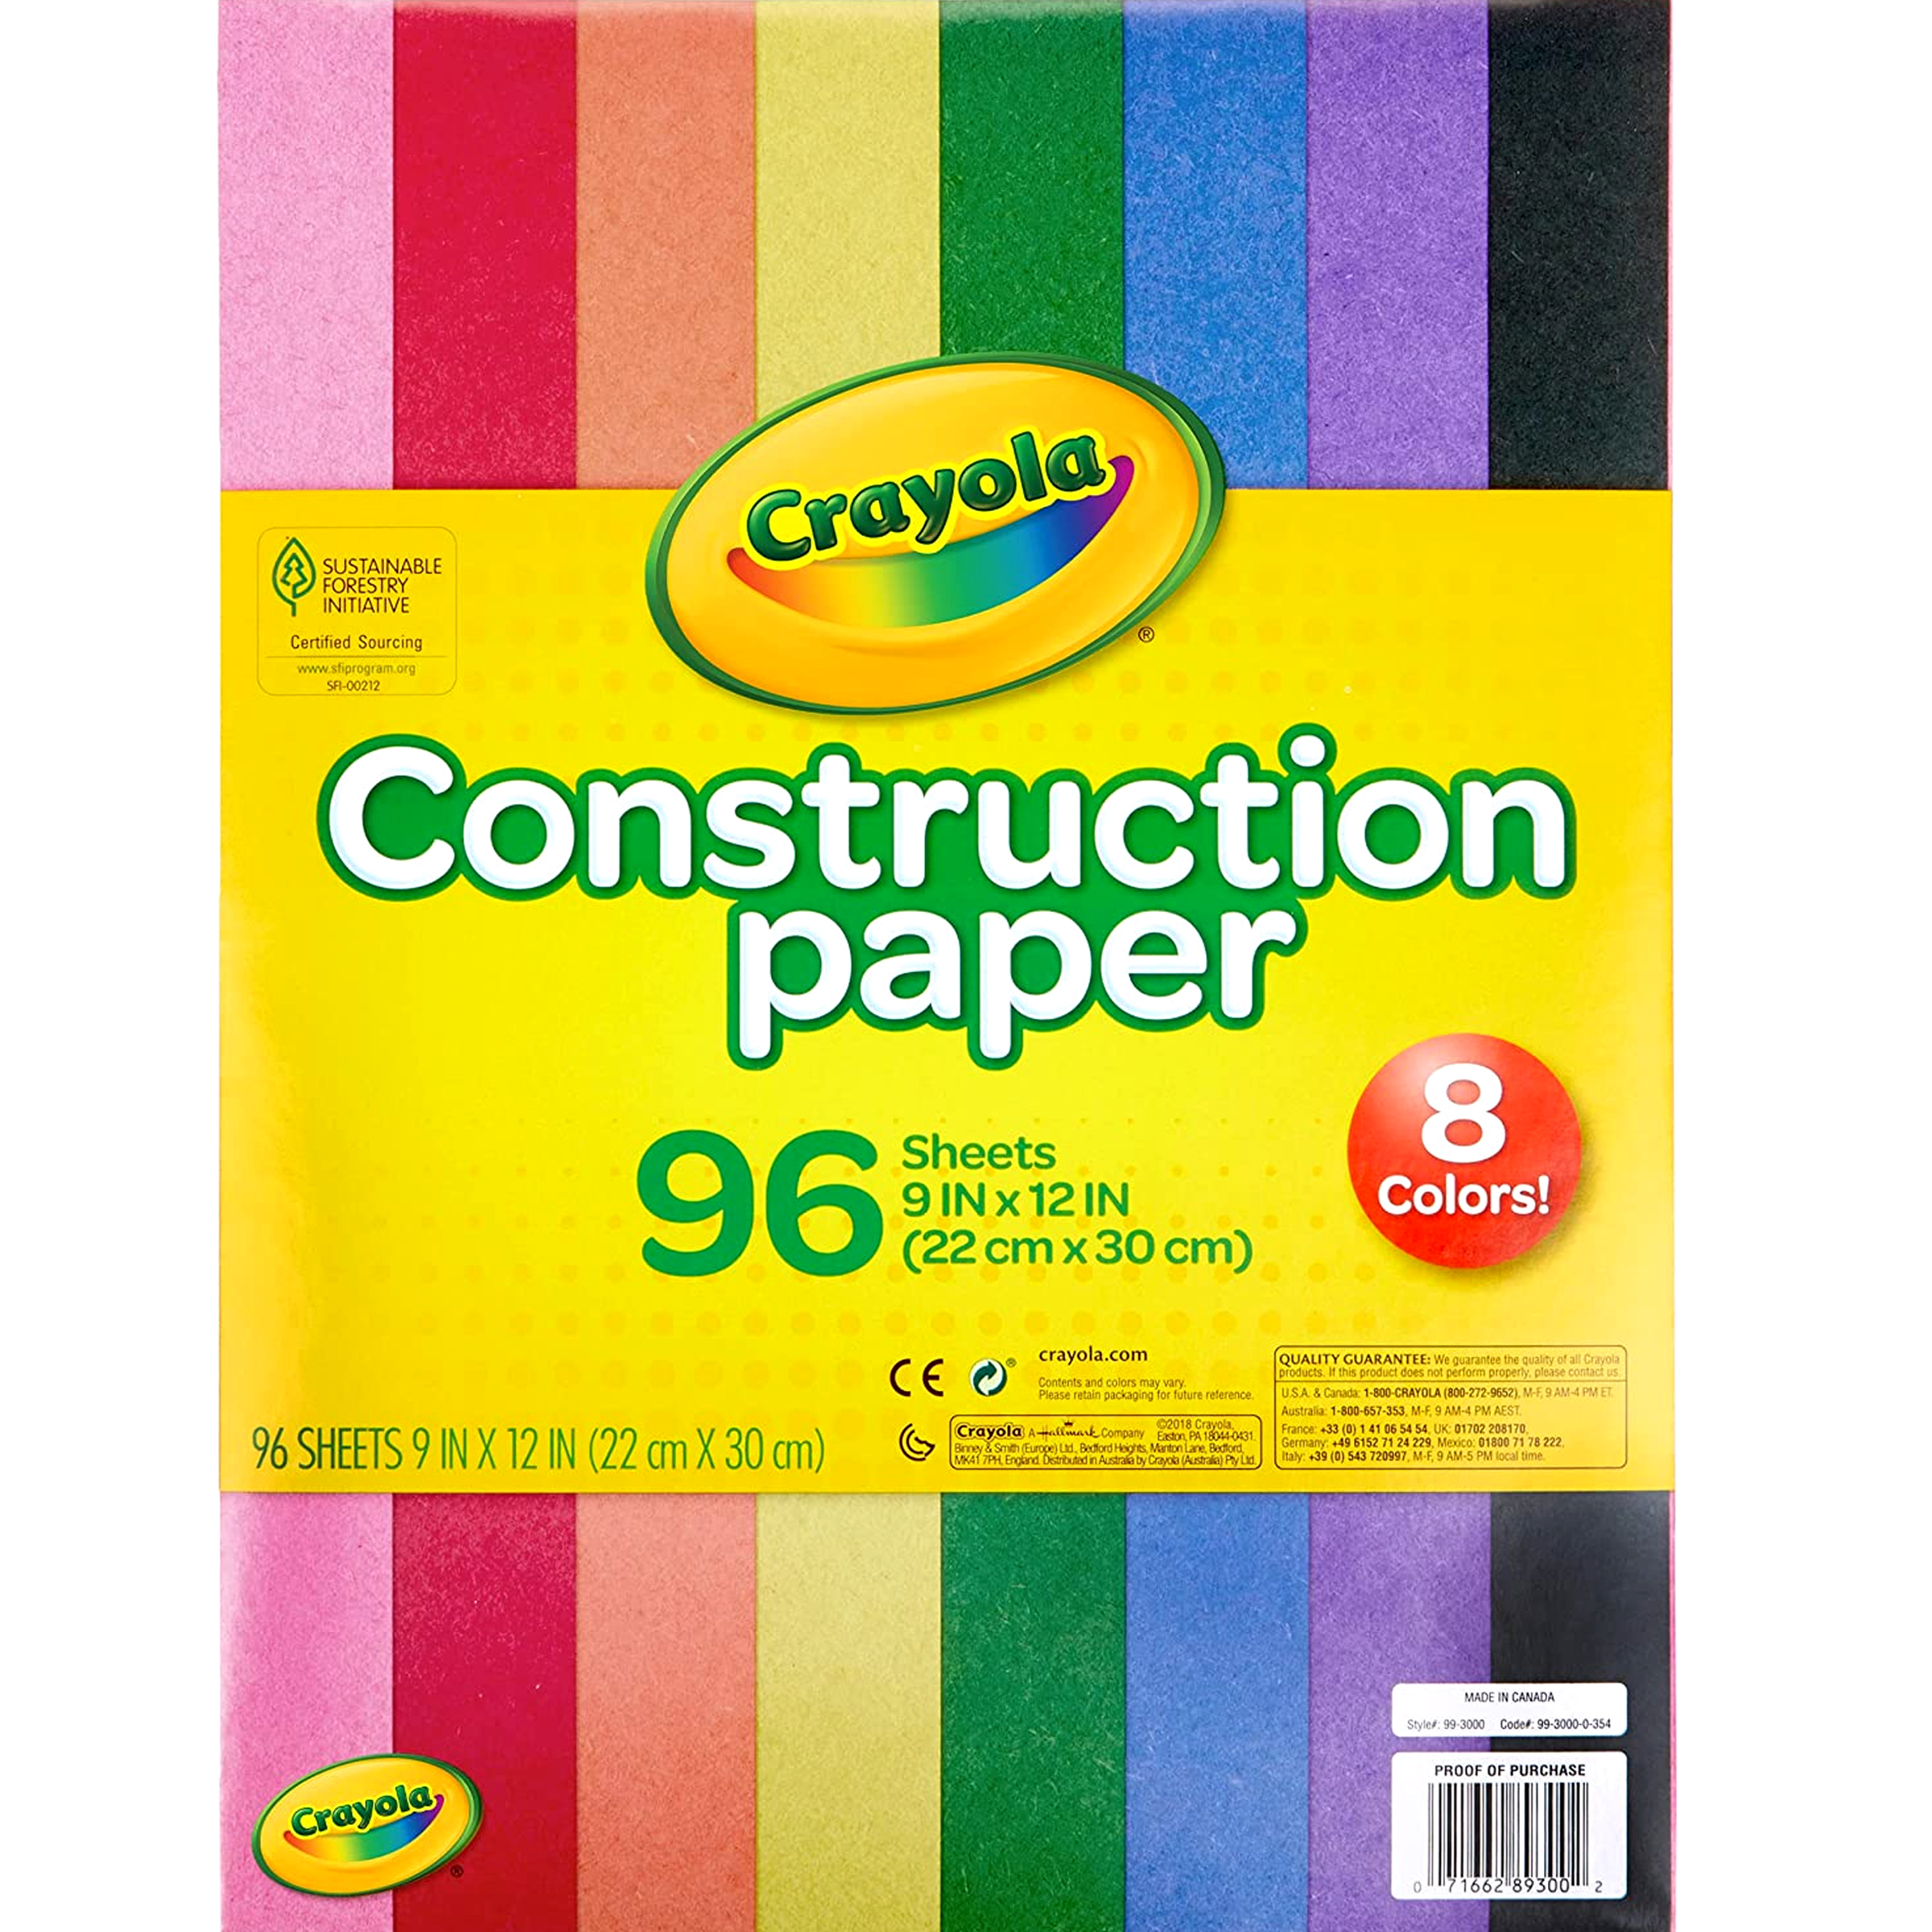 Crayola Construction Paper 96 Sheets 9×12 -99-3000